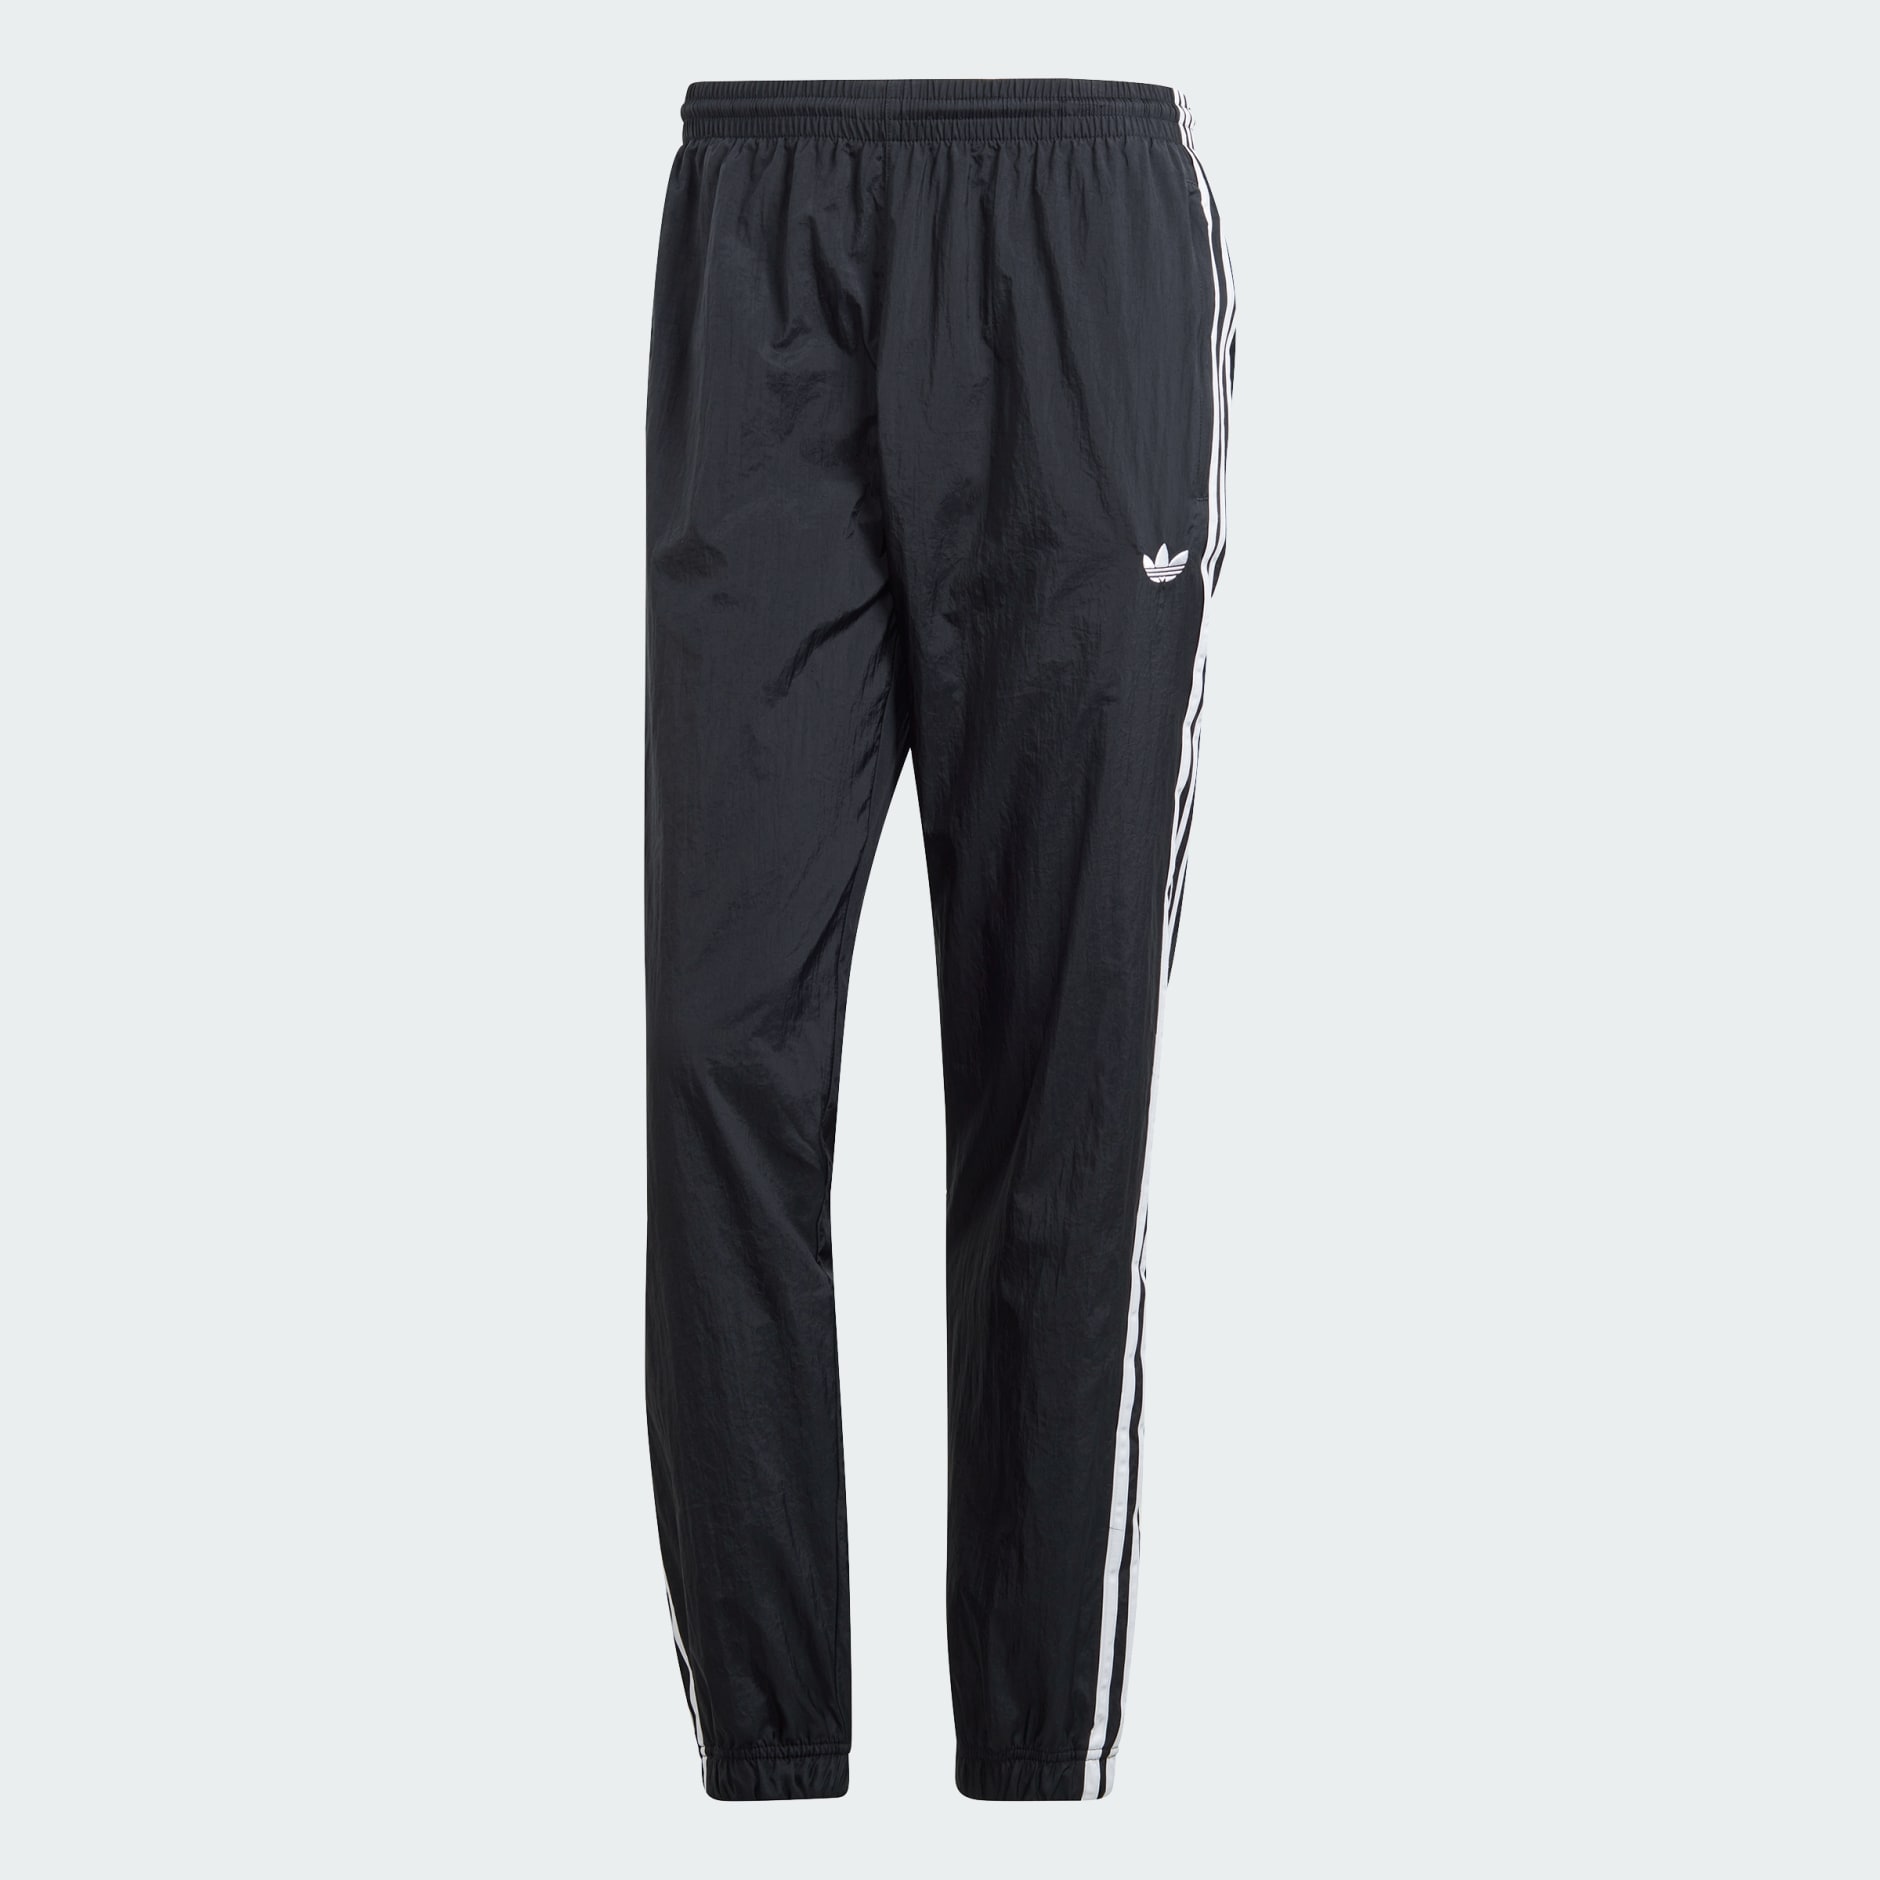 Woven Black LK adidas - Rekive | adidas Pants adidas Track